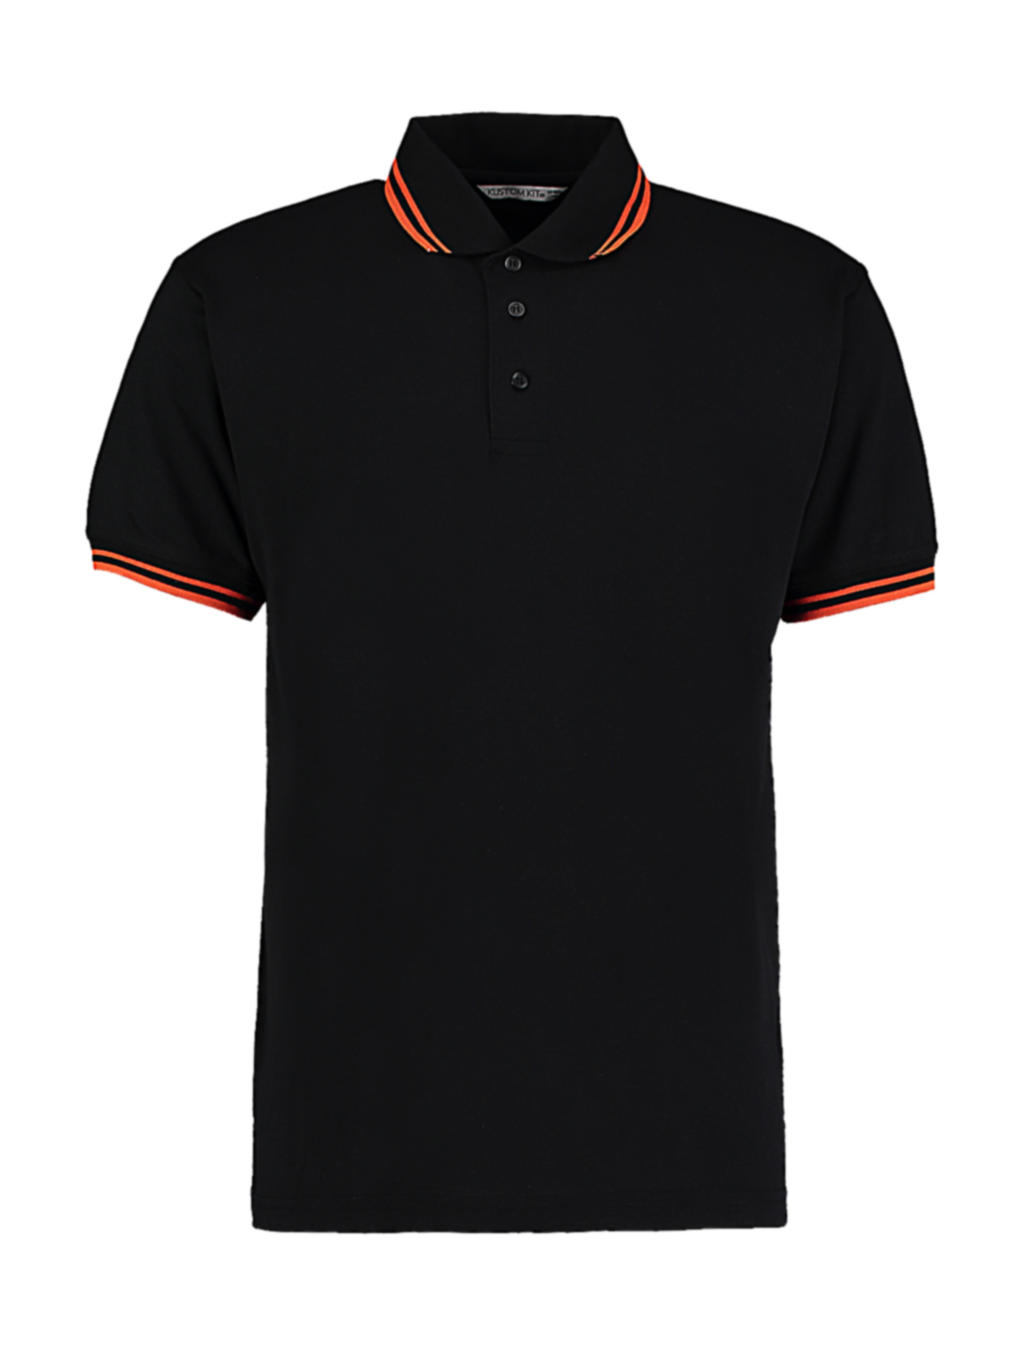  Classic Fit Tipped Collar Polo in Farbe Black/Orange